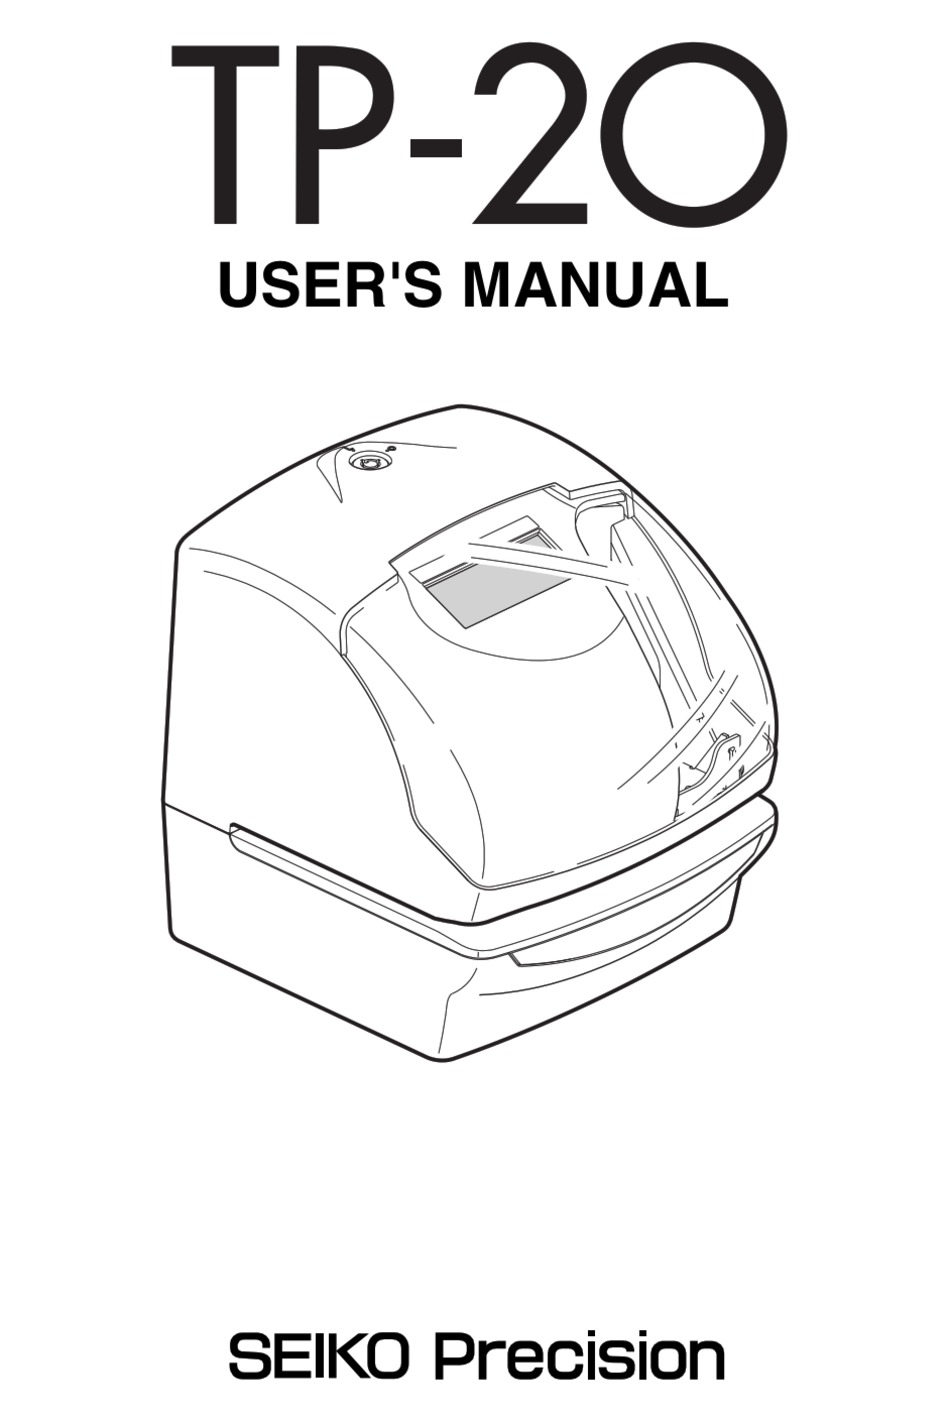 SEIKO TP-20 USER MANUAL Pdf Download | ManualsLib